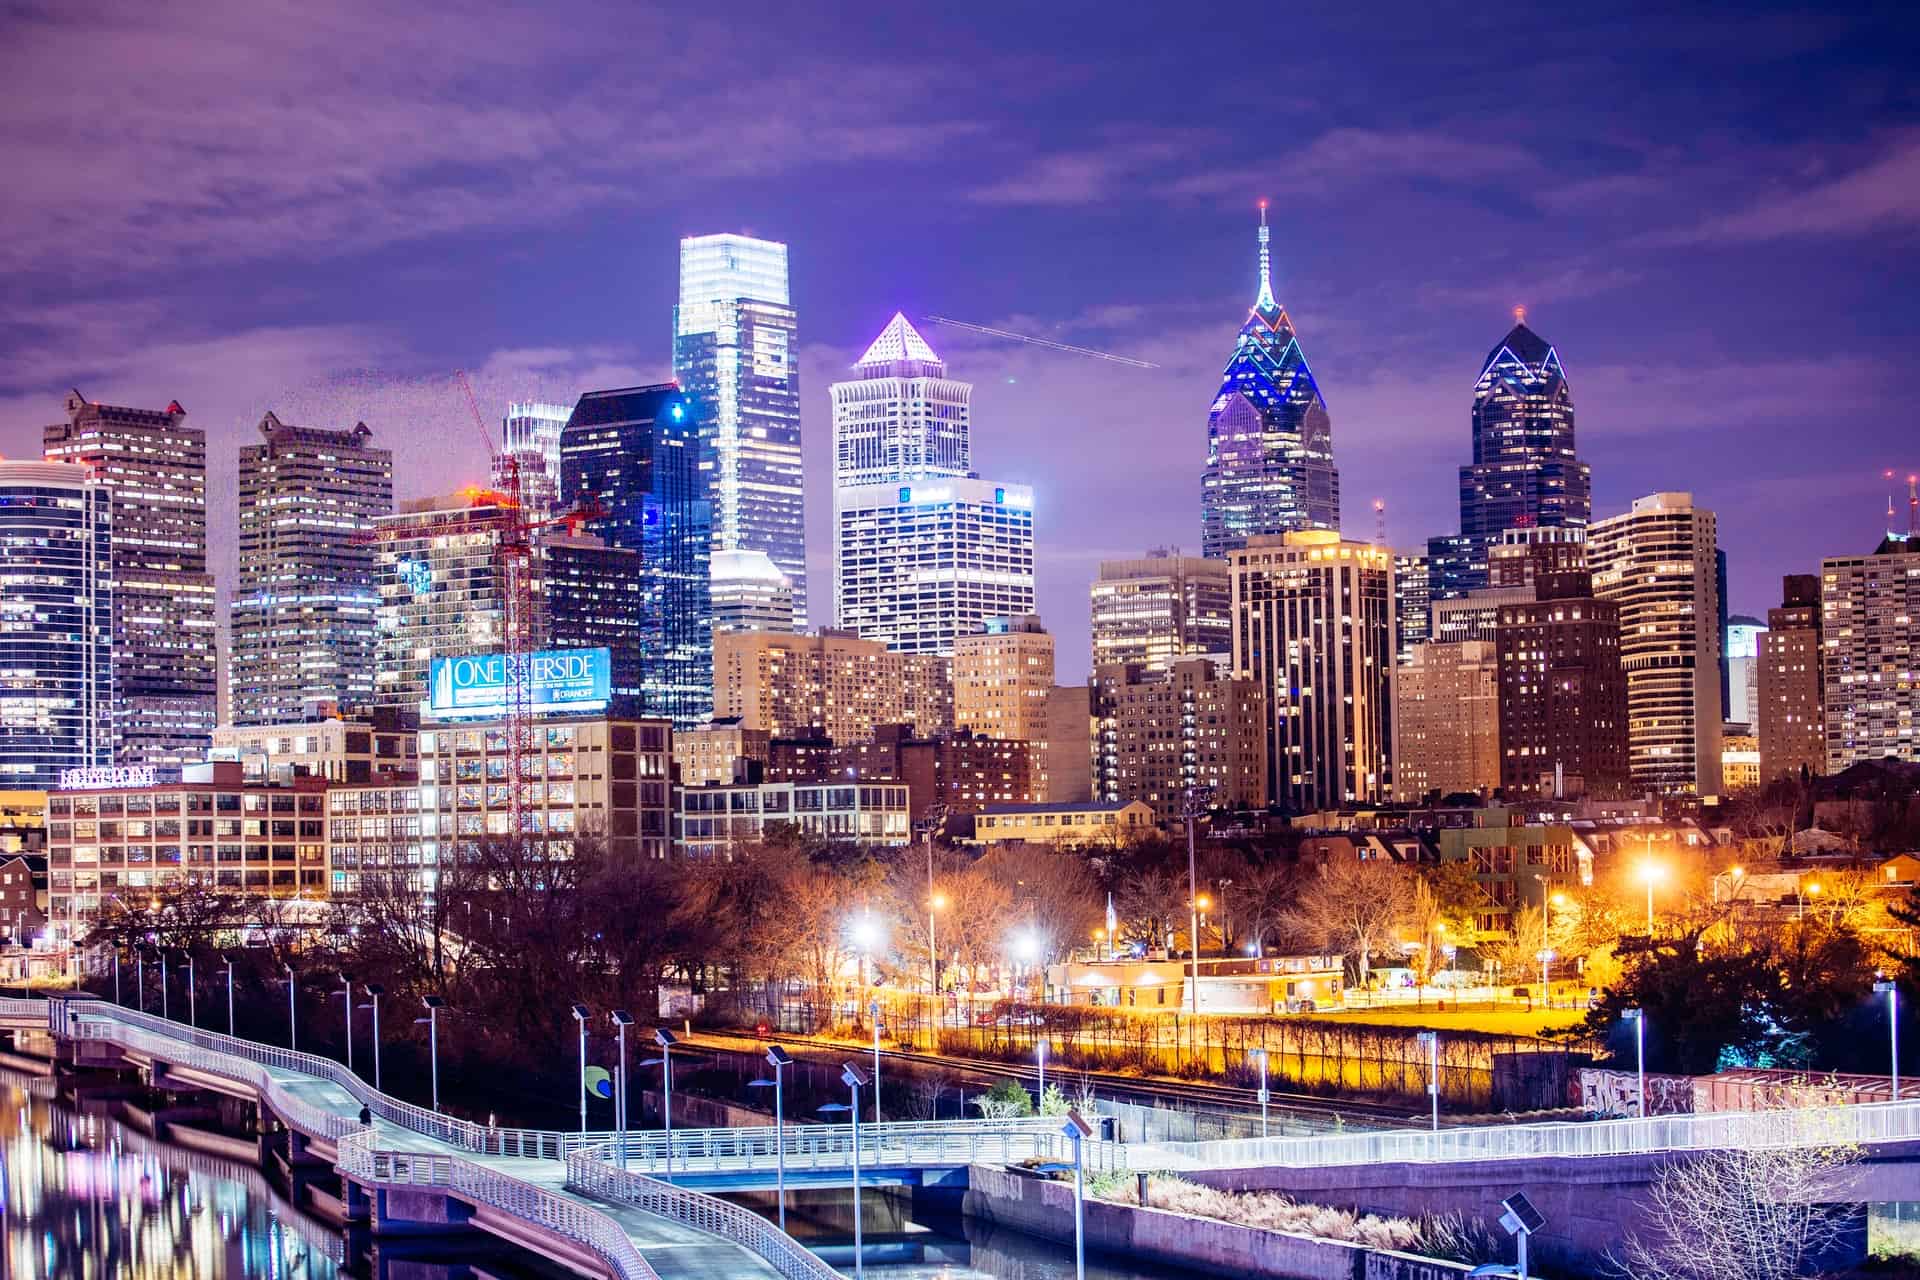 Best things to do in Philadelphia Pennsylvania - Bob DiMenna - Cityscape at night by Scott Serhat Duygun on Unsplash